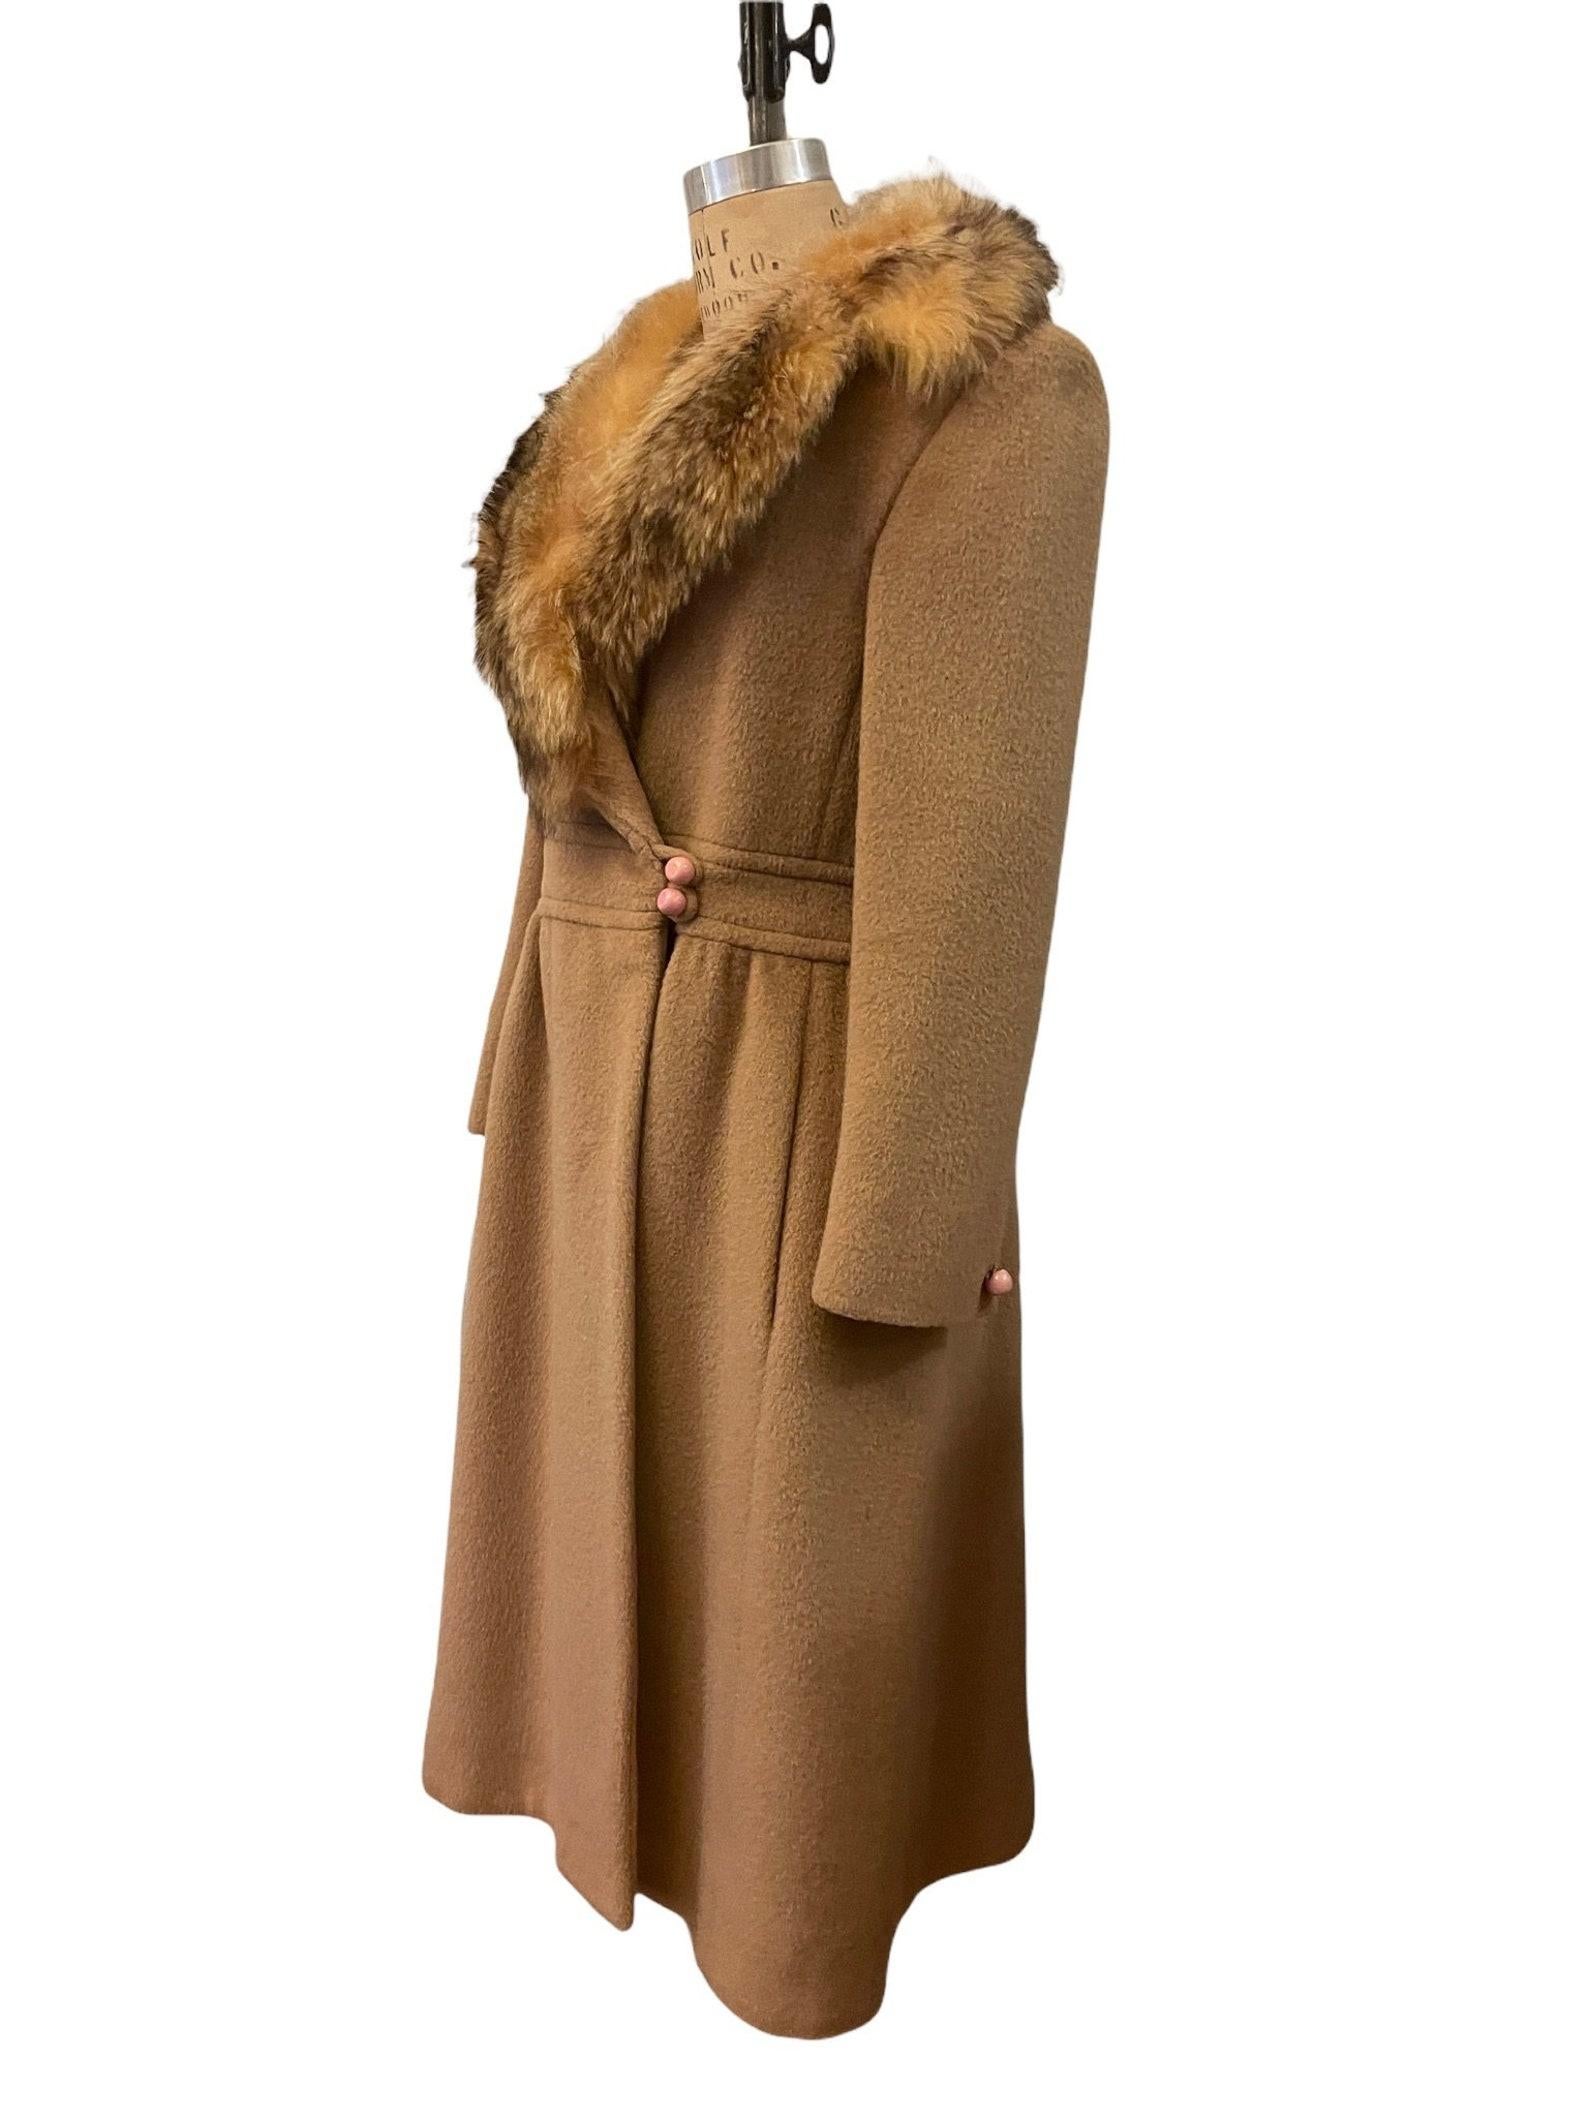 Pierre Cardin Wool Princess Coat with Fox Fur Collar, Circa 1970s For Sale 1